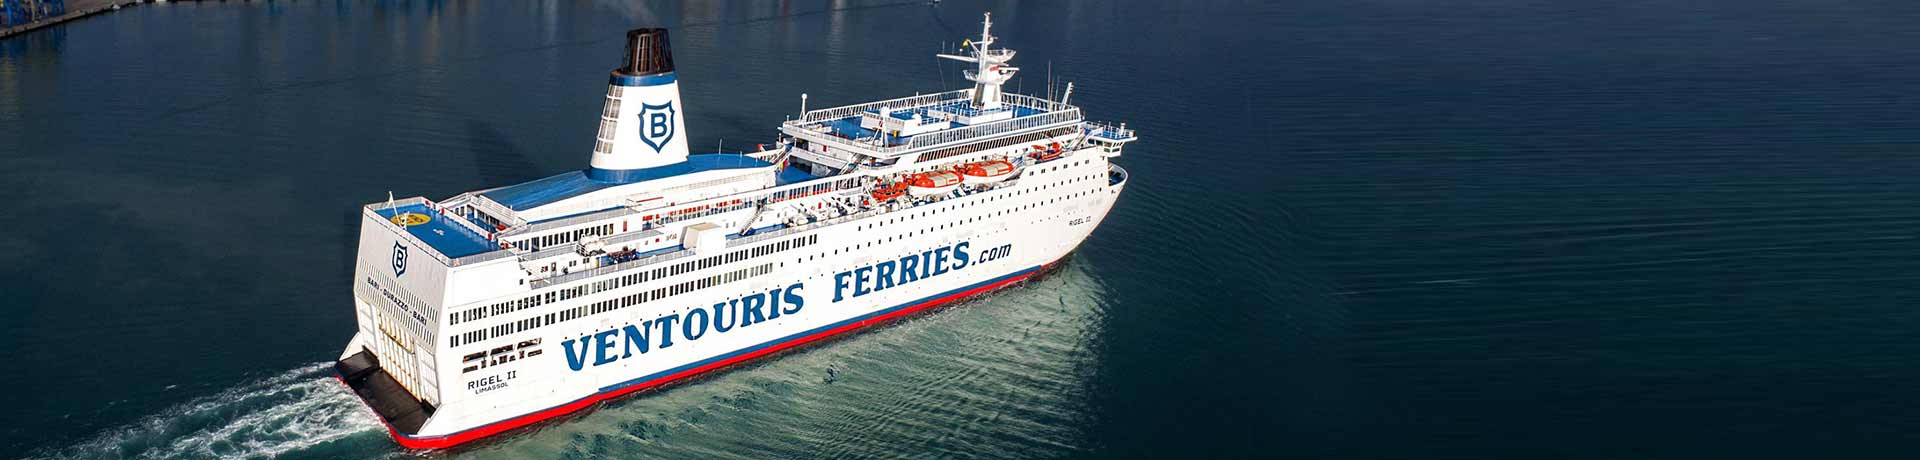 Main top decorational image for Ventouris Ferries